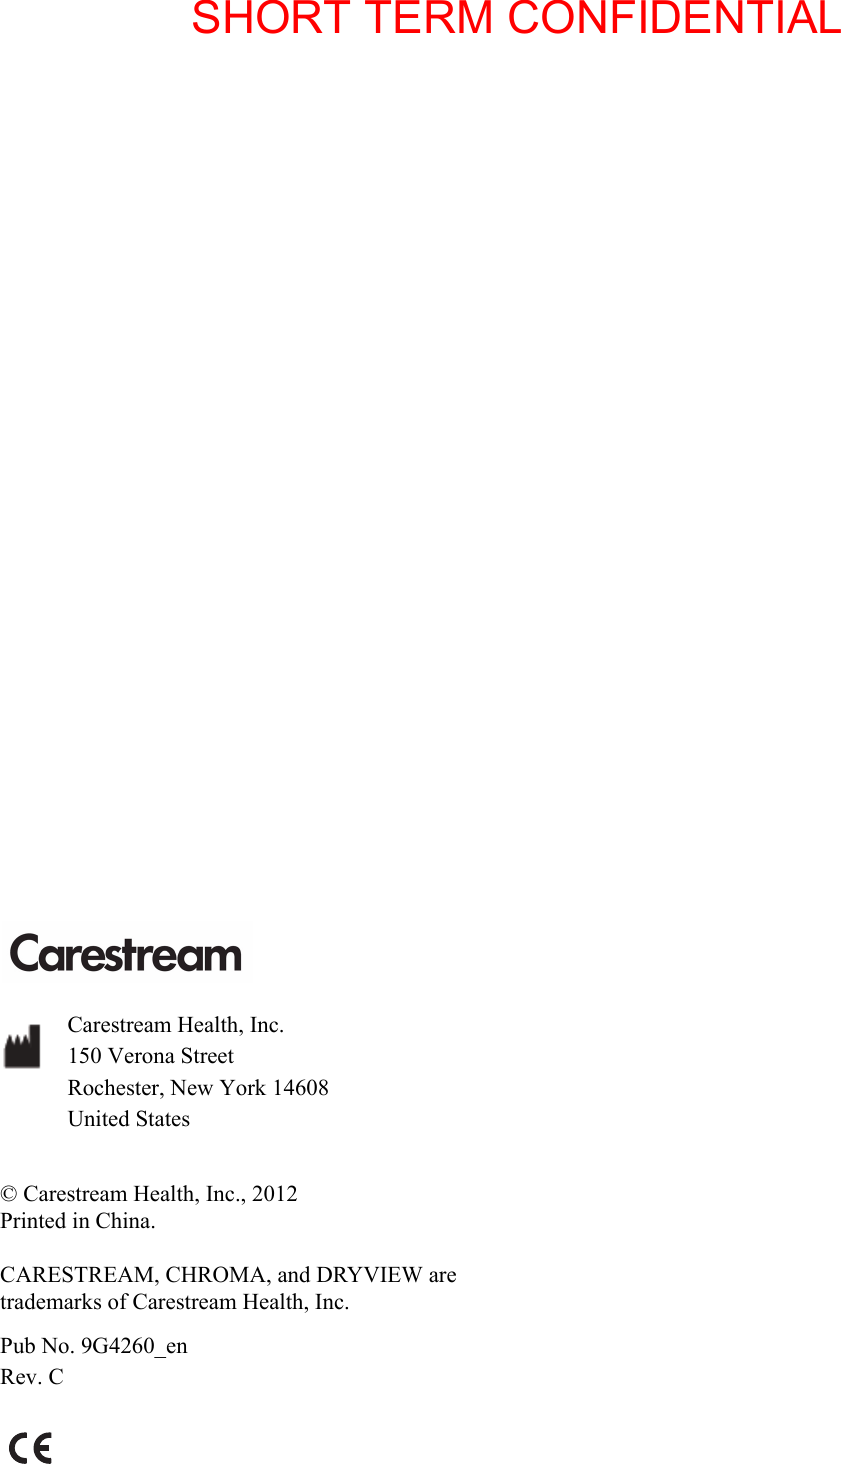 Carestream Health, Inc.150 Verona StreetRochester, New York 14608United States© Carestream Health, Inc., 2012Printed in China.CARESTREAM, CHROMA, and DRYVIEW are trademarks of Carestream Health, Inc.Pub No. 9G4260_enRev. CSHORT TERM CONFIDENTIAL